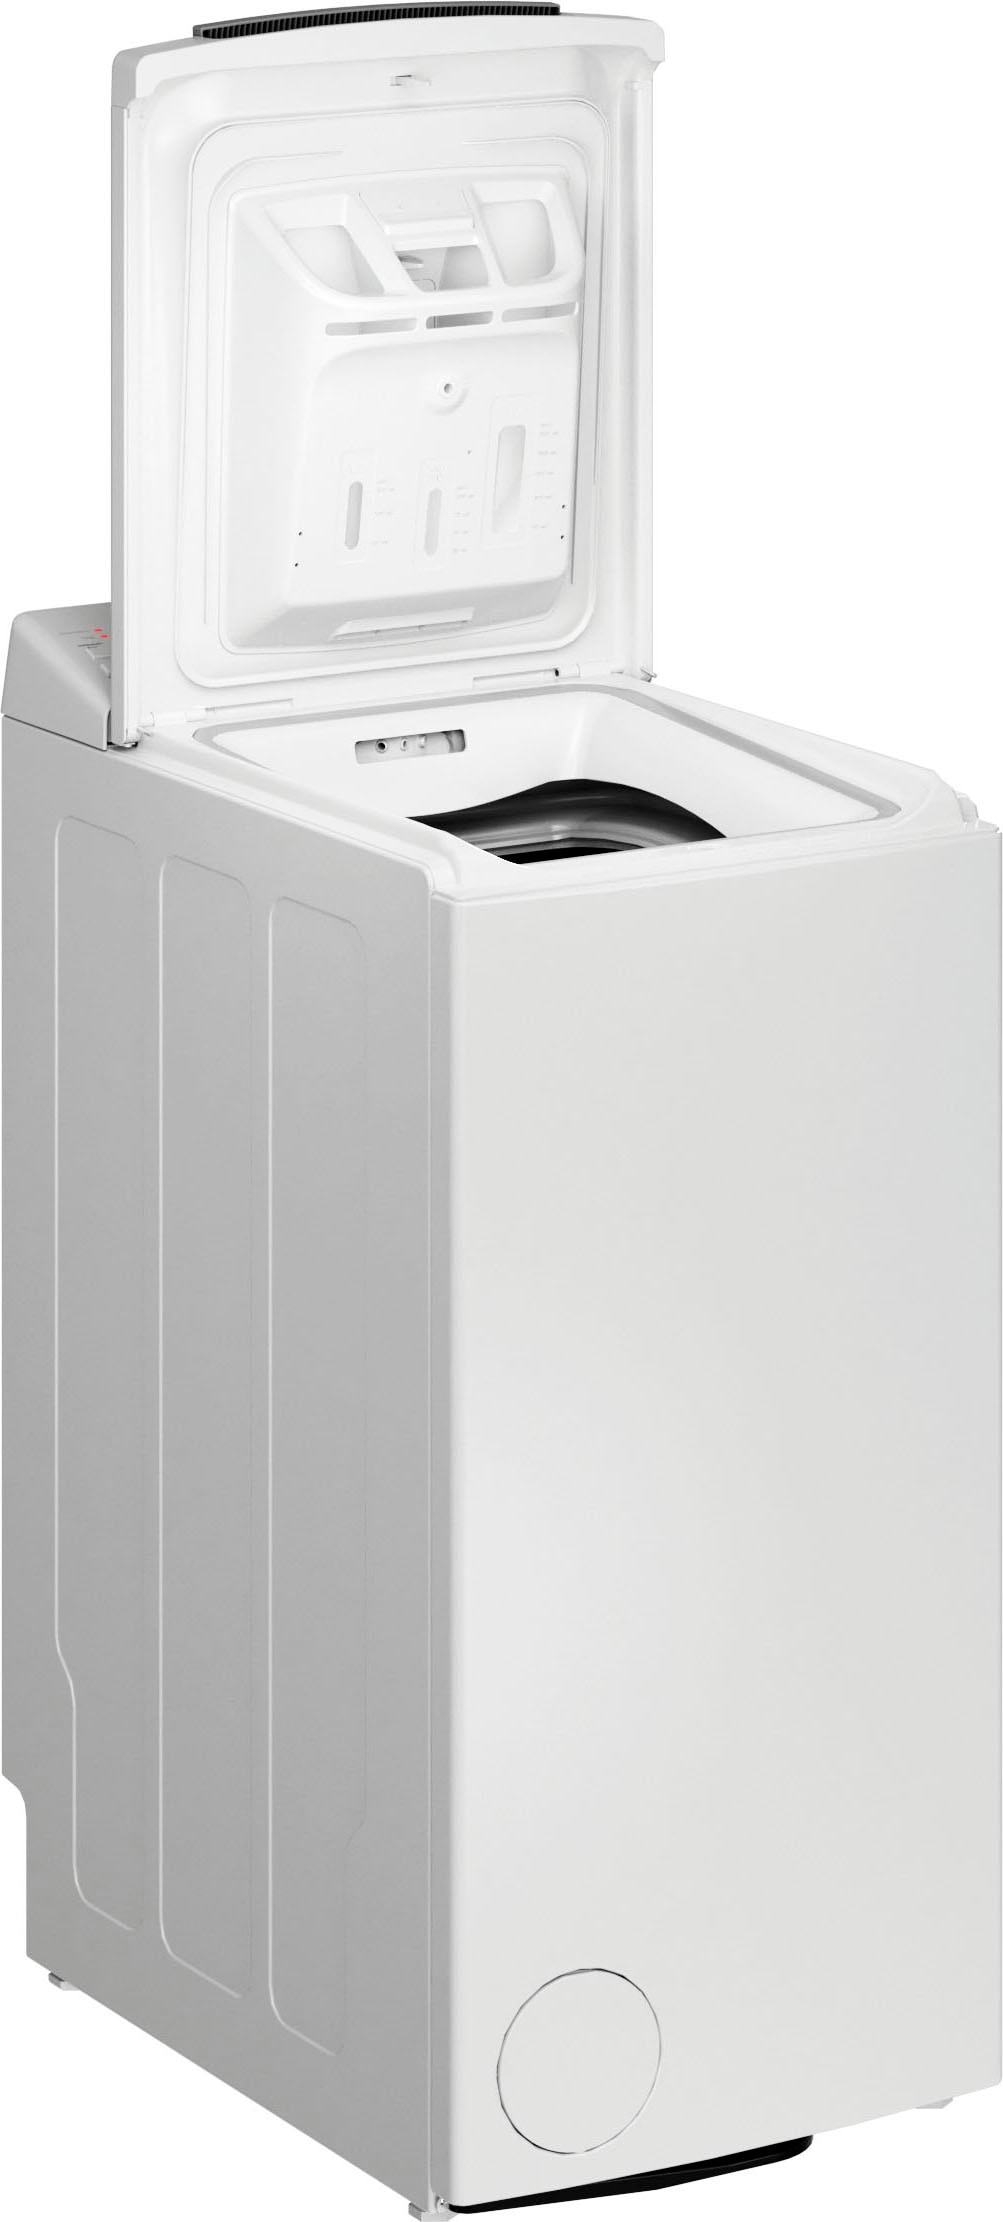 BAUKNECHT Waschmaschine Toplader »WAT Eco 712 B3«, WAT Eco 712 B3, 7 kg, 1200 U/min